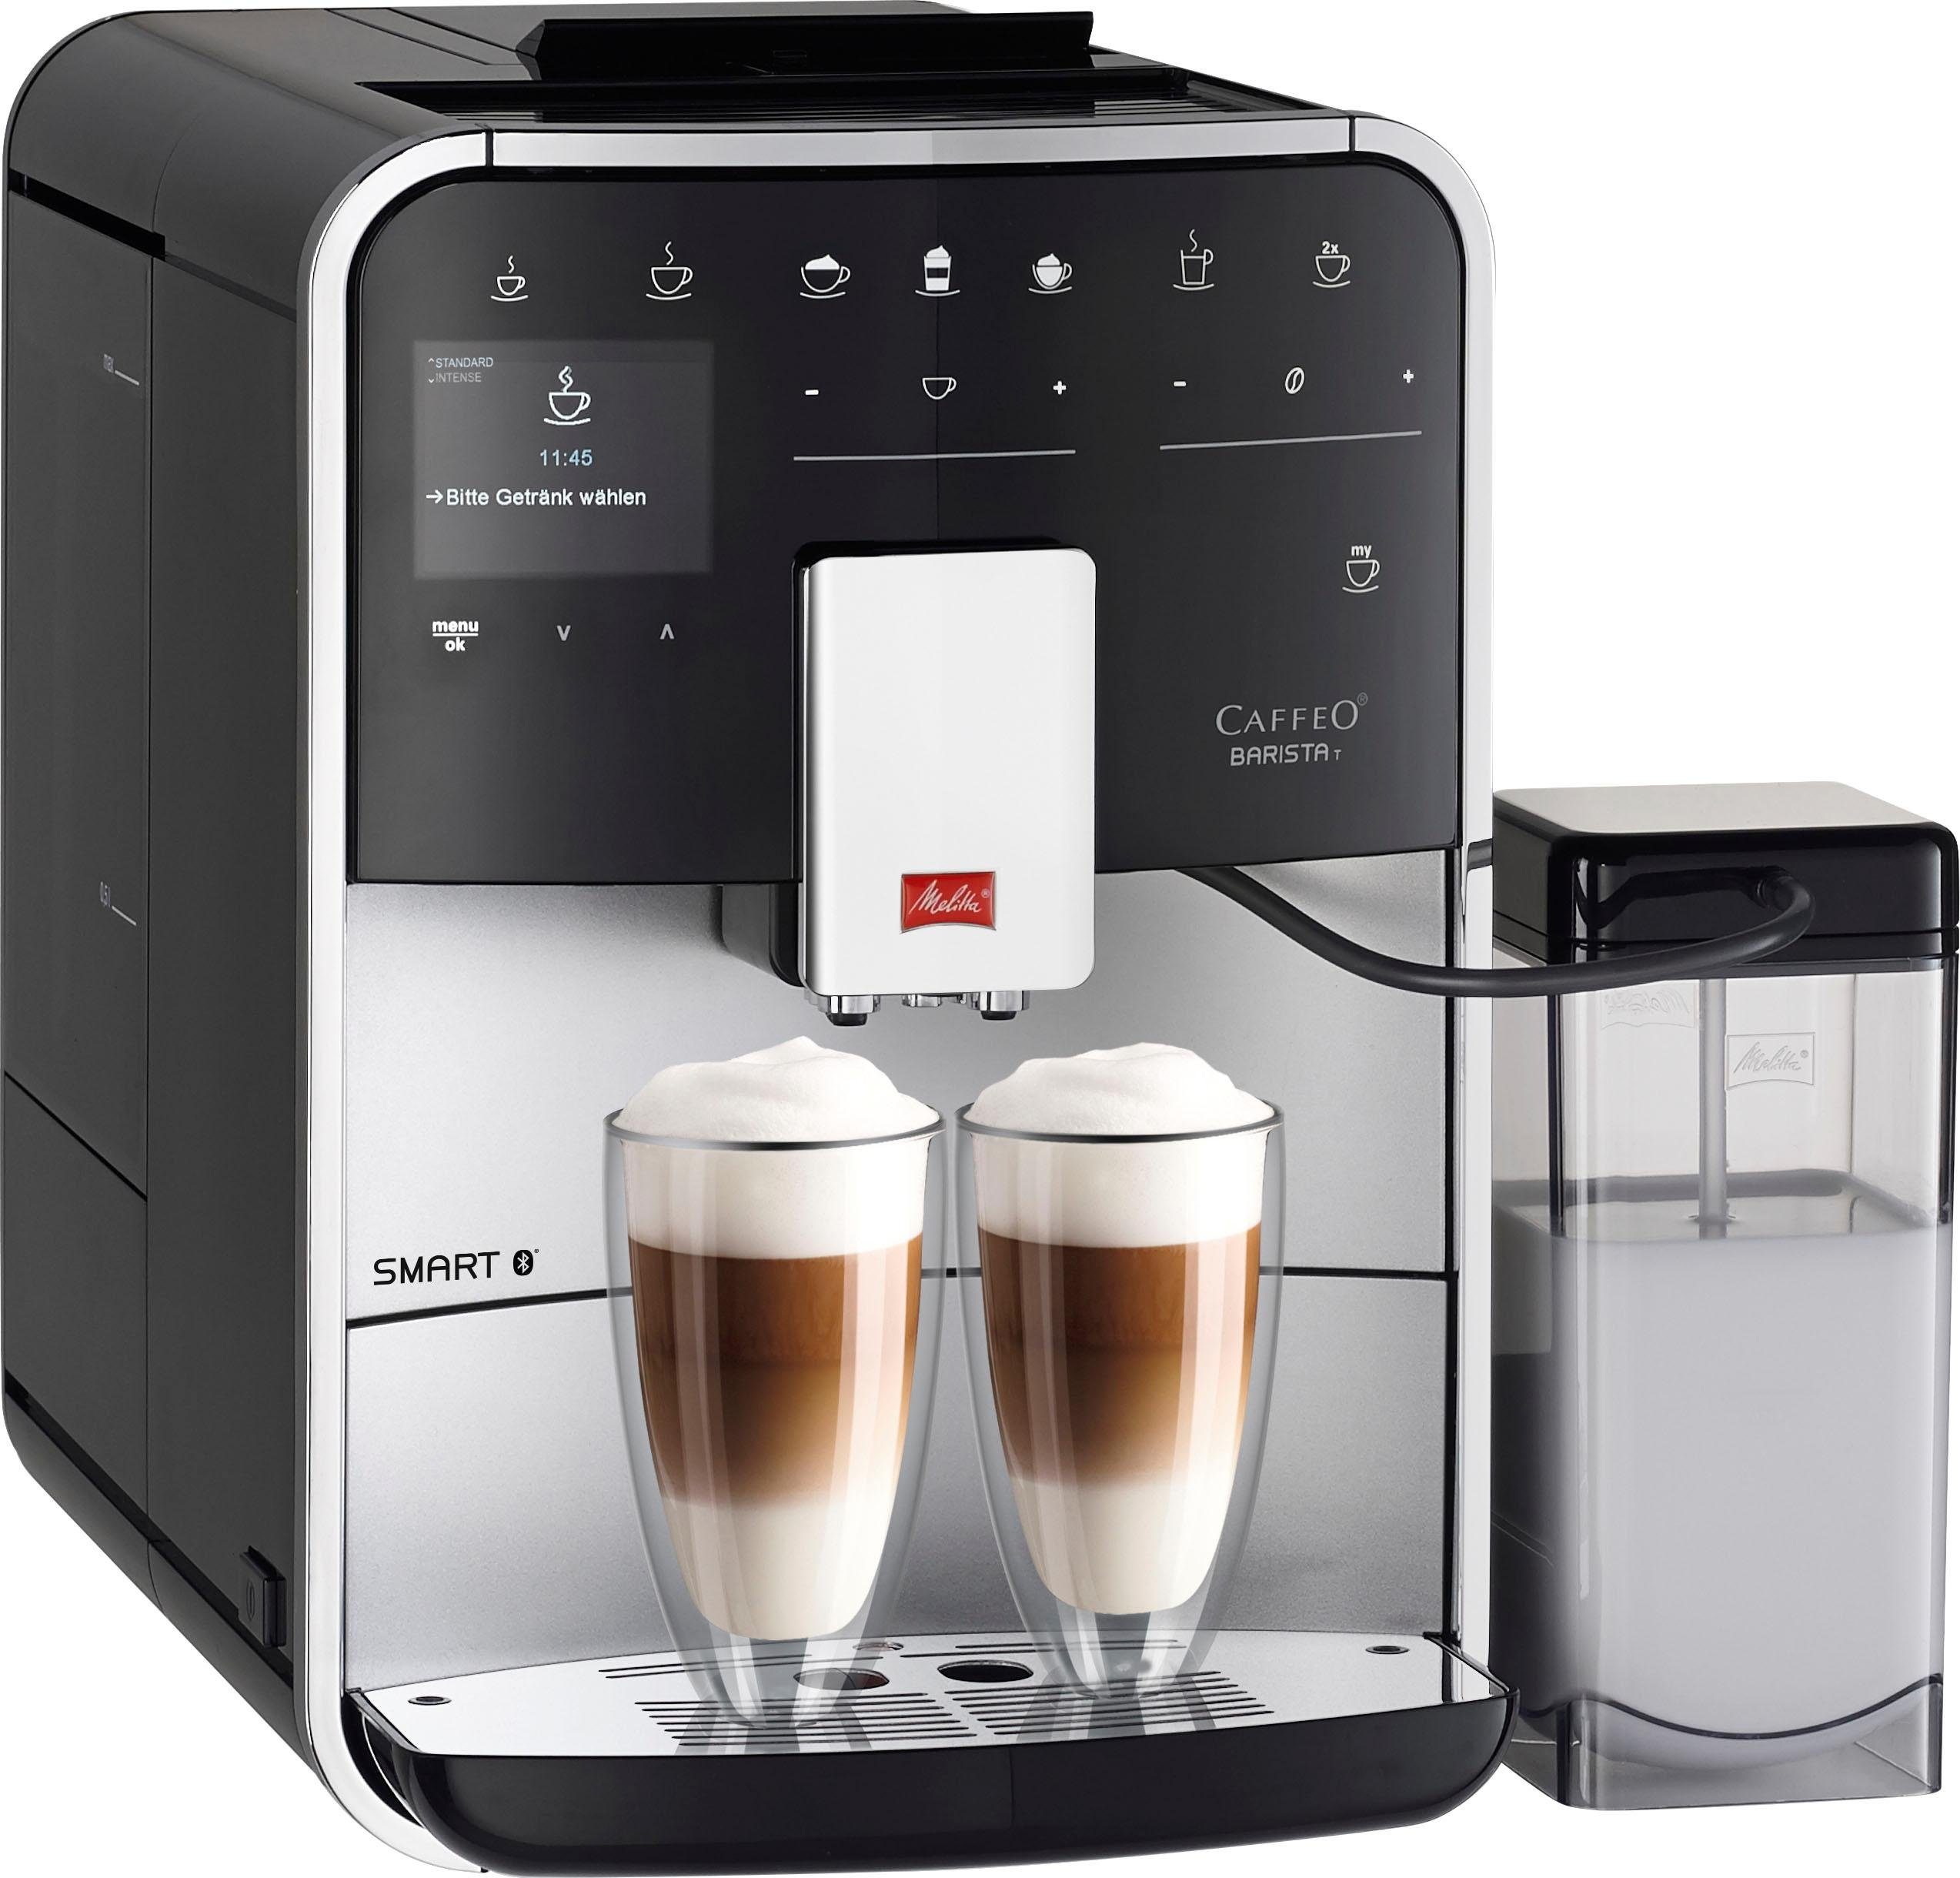 4 F 83/0-101, Barista Kaffeevollautomat nach italienischem Benutzerprofile&18 T silber, Melitta Smart® Kaffeerezepte,